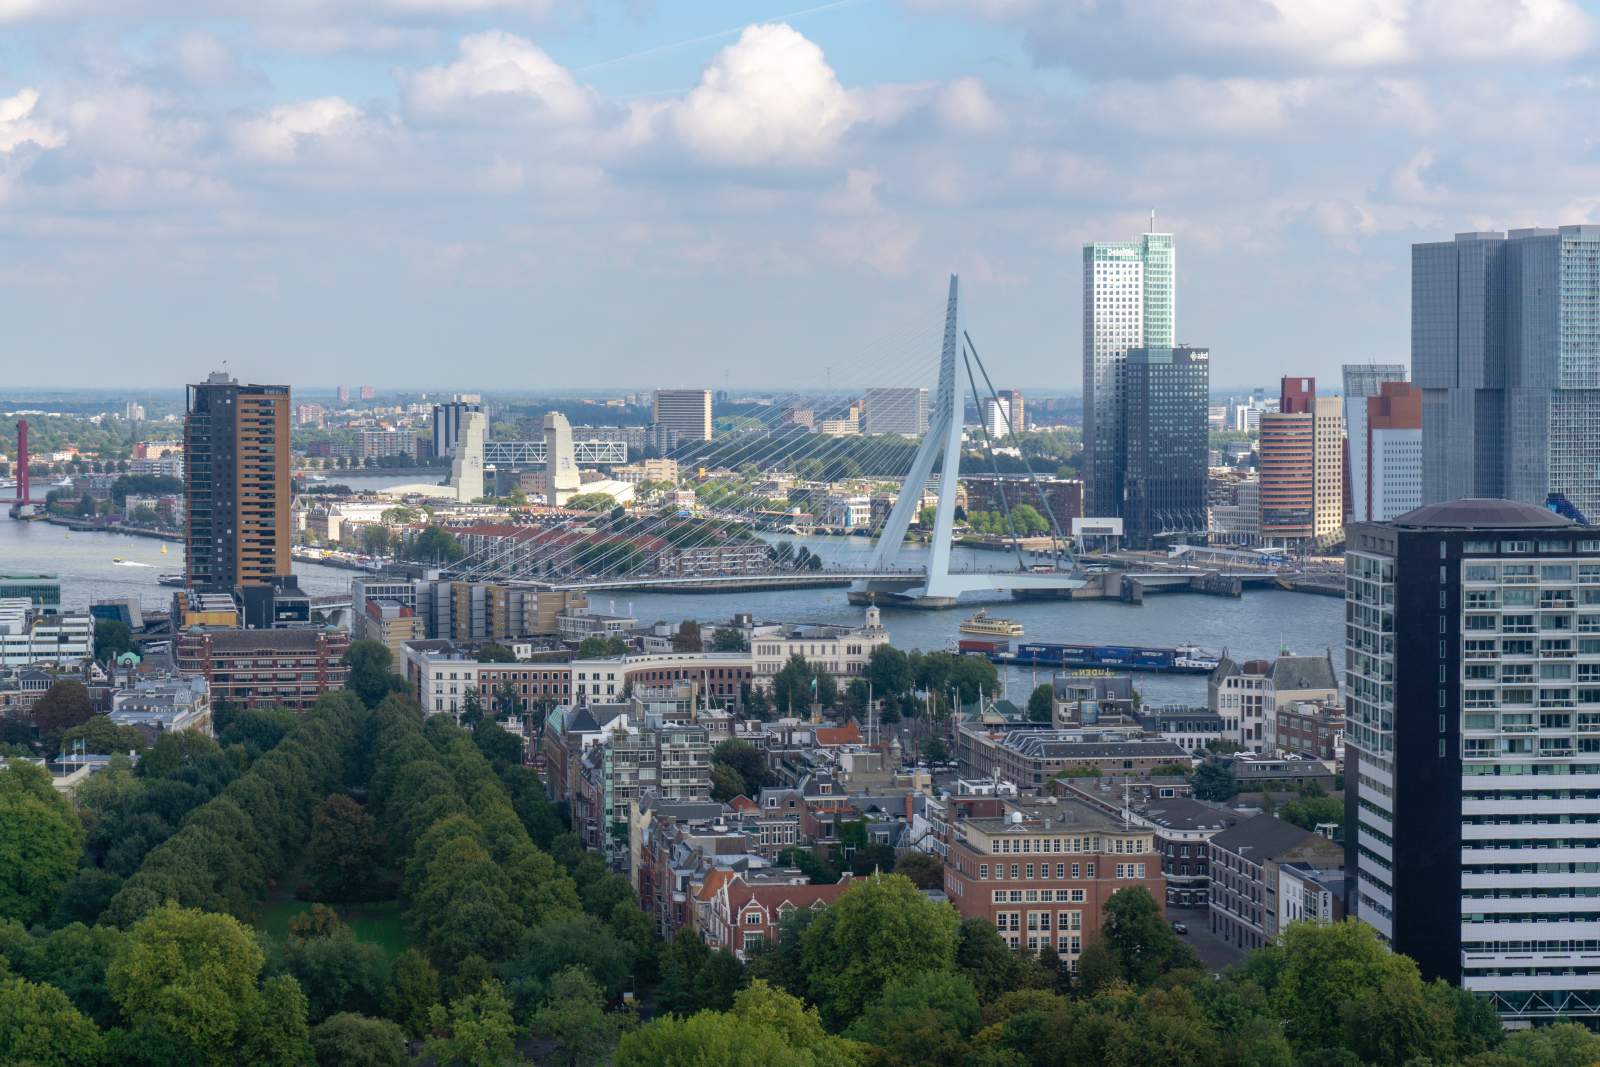 Rotterdam urban river delta